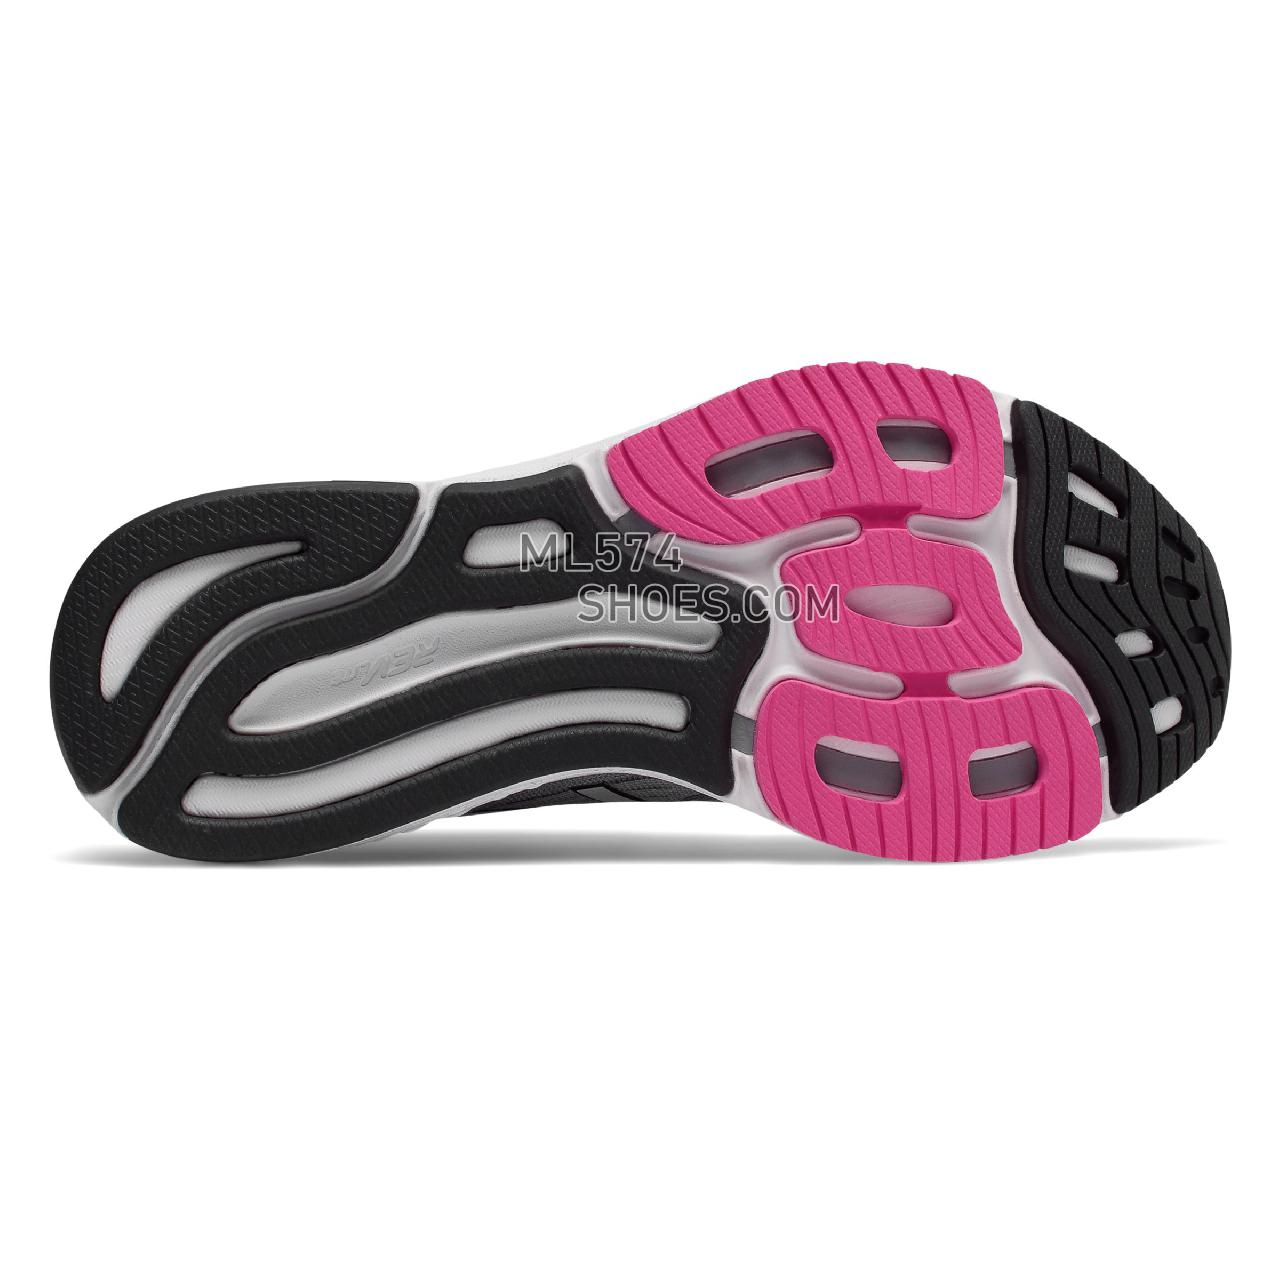 New Balance 890v6 Pink Ribbon - Women's 890 - Running Grey with Pink Glo - W890KM6